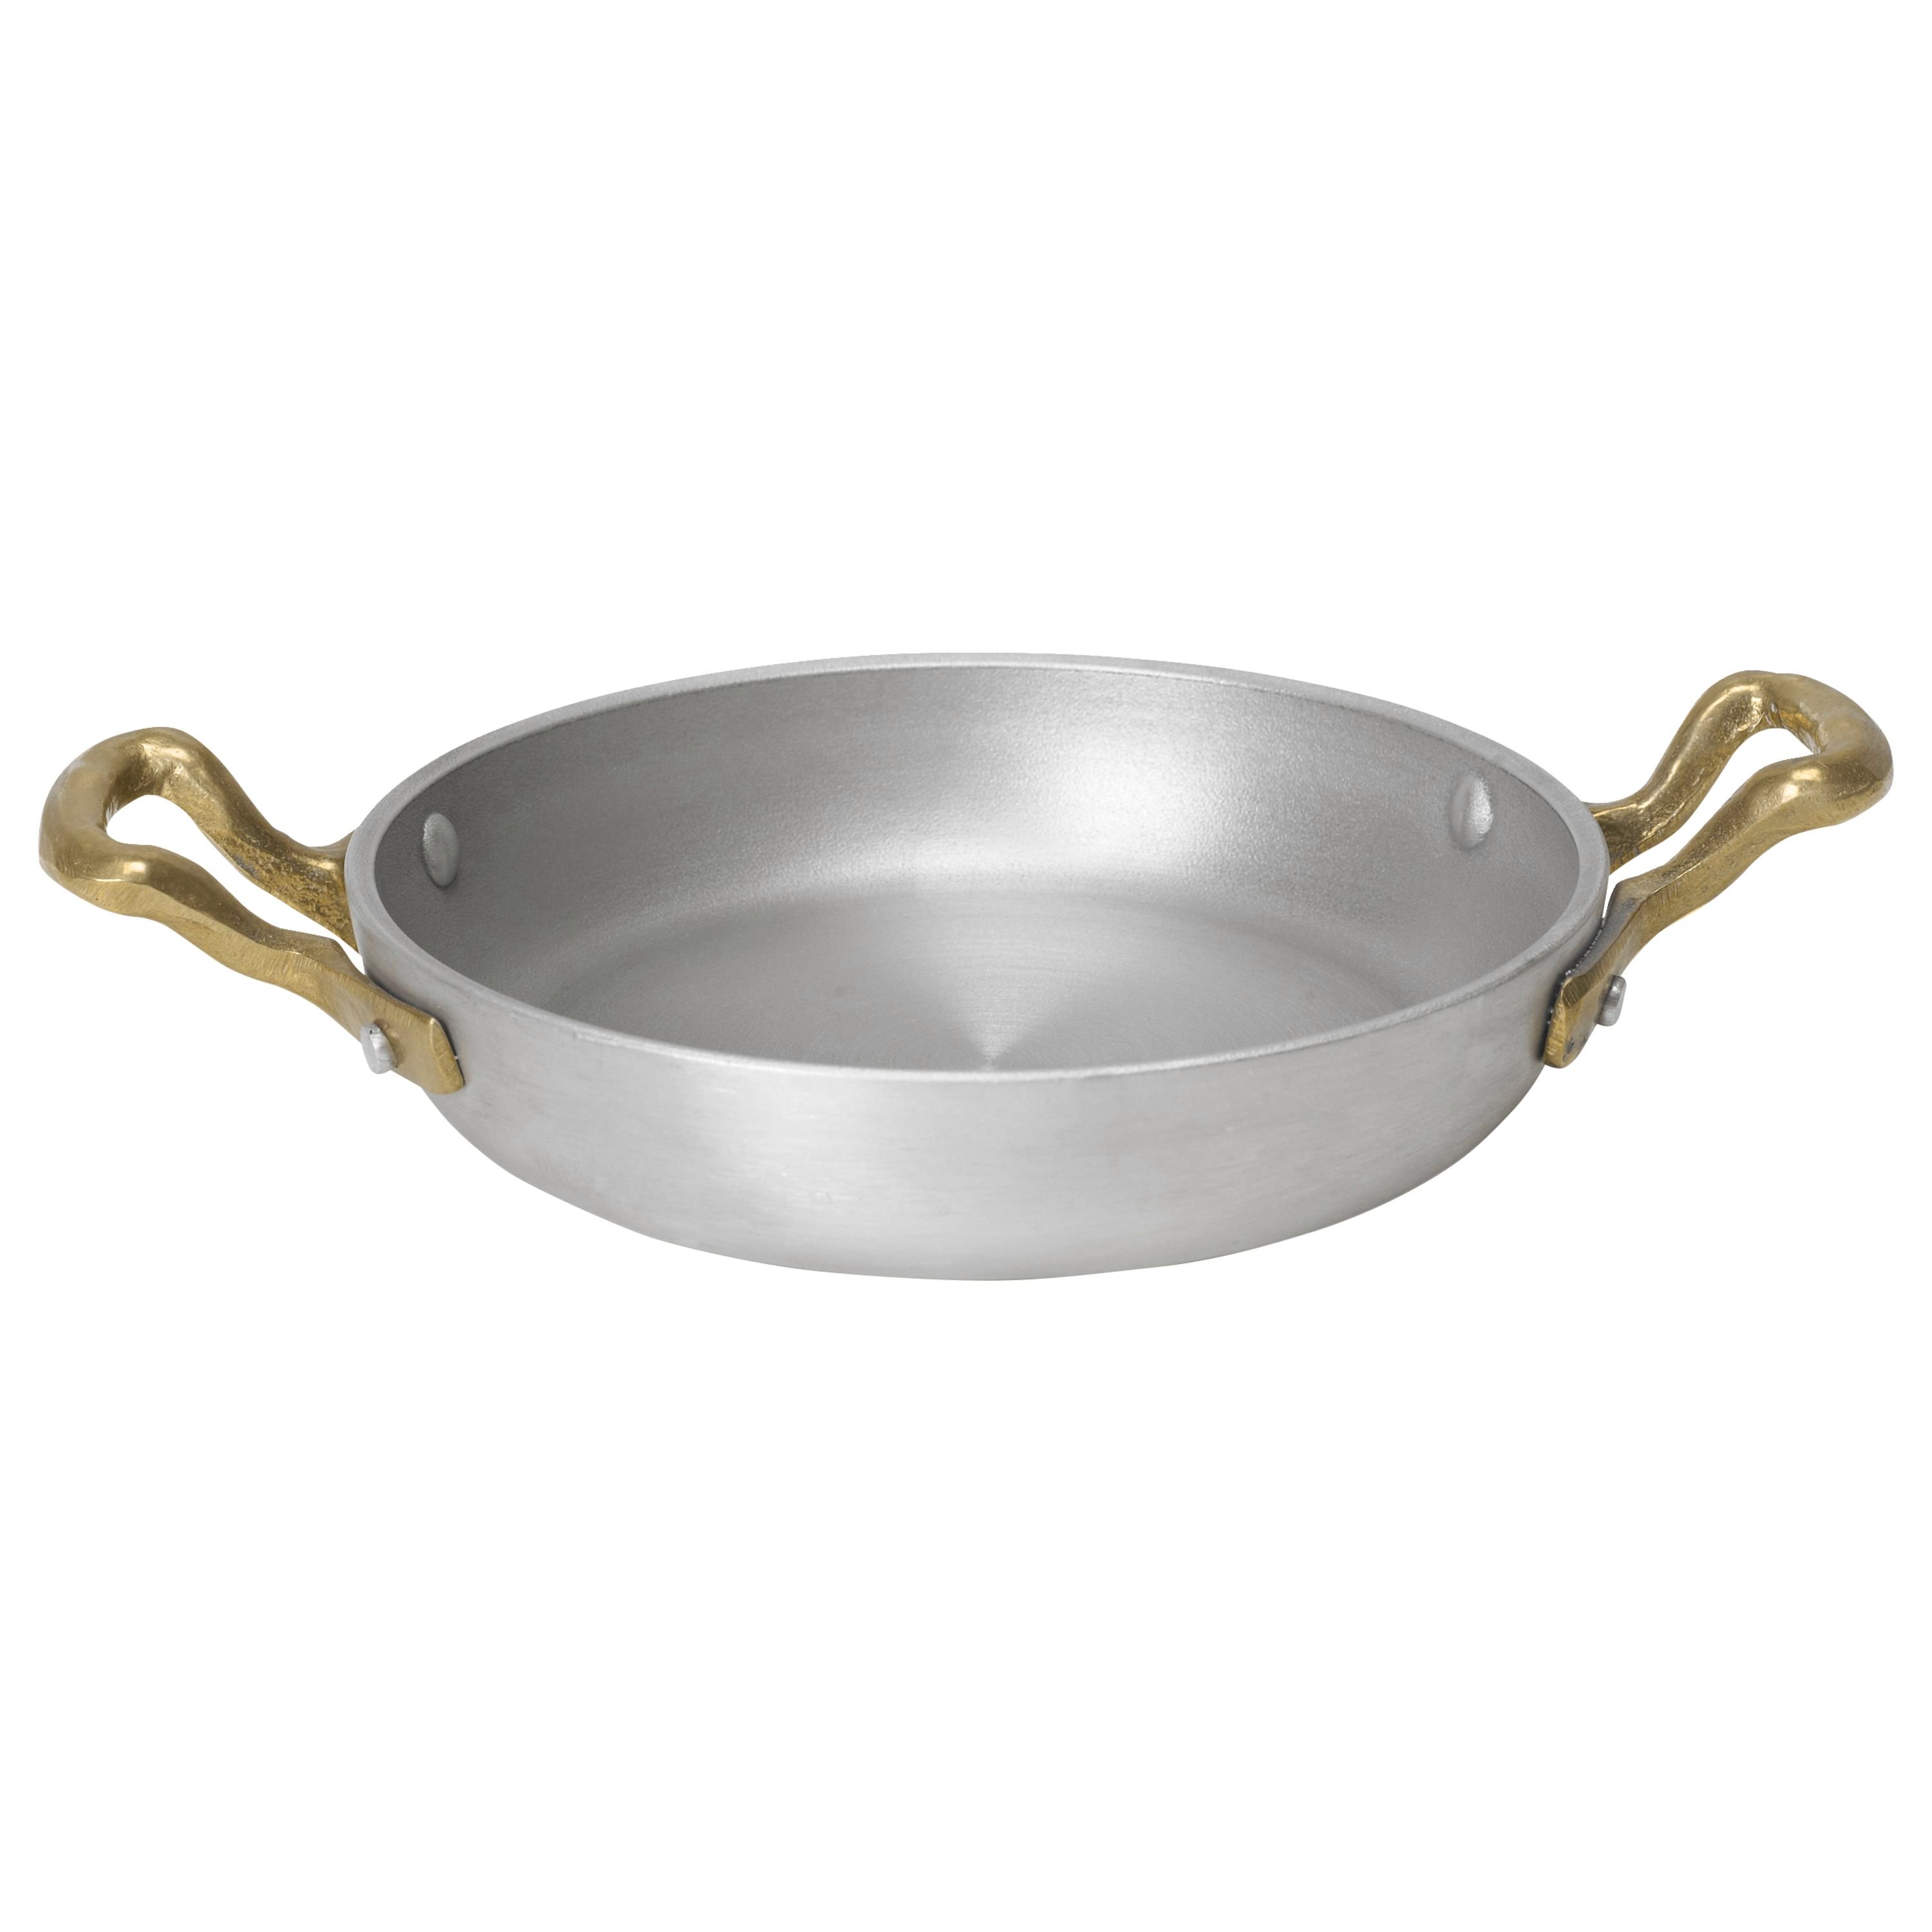  Ballarini 75000-585 Bologna Frying Pan, 7.9 inches (20 cm),  Induction Compatible, Ceramic Coating, Dishwasher Safe: Home & Kitchen